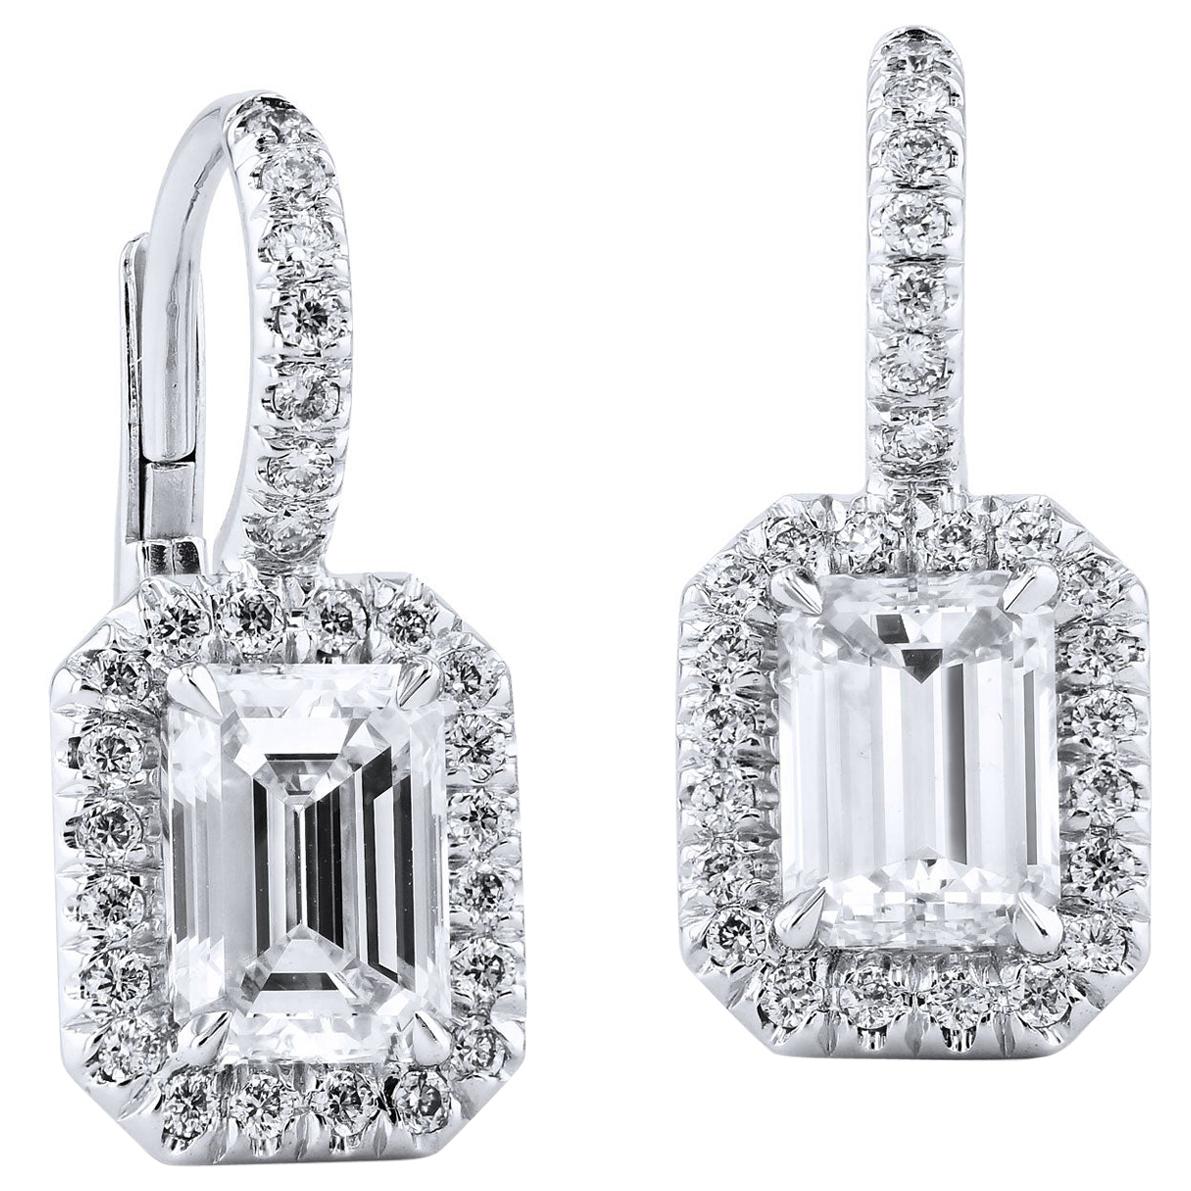 GIA Certified 1.81 carat total weight Emerald Cut Diamond White Gold Earrings 